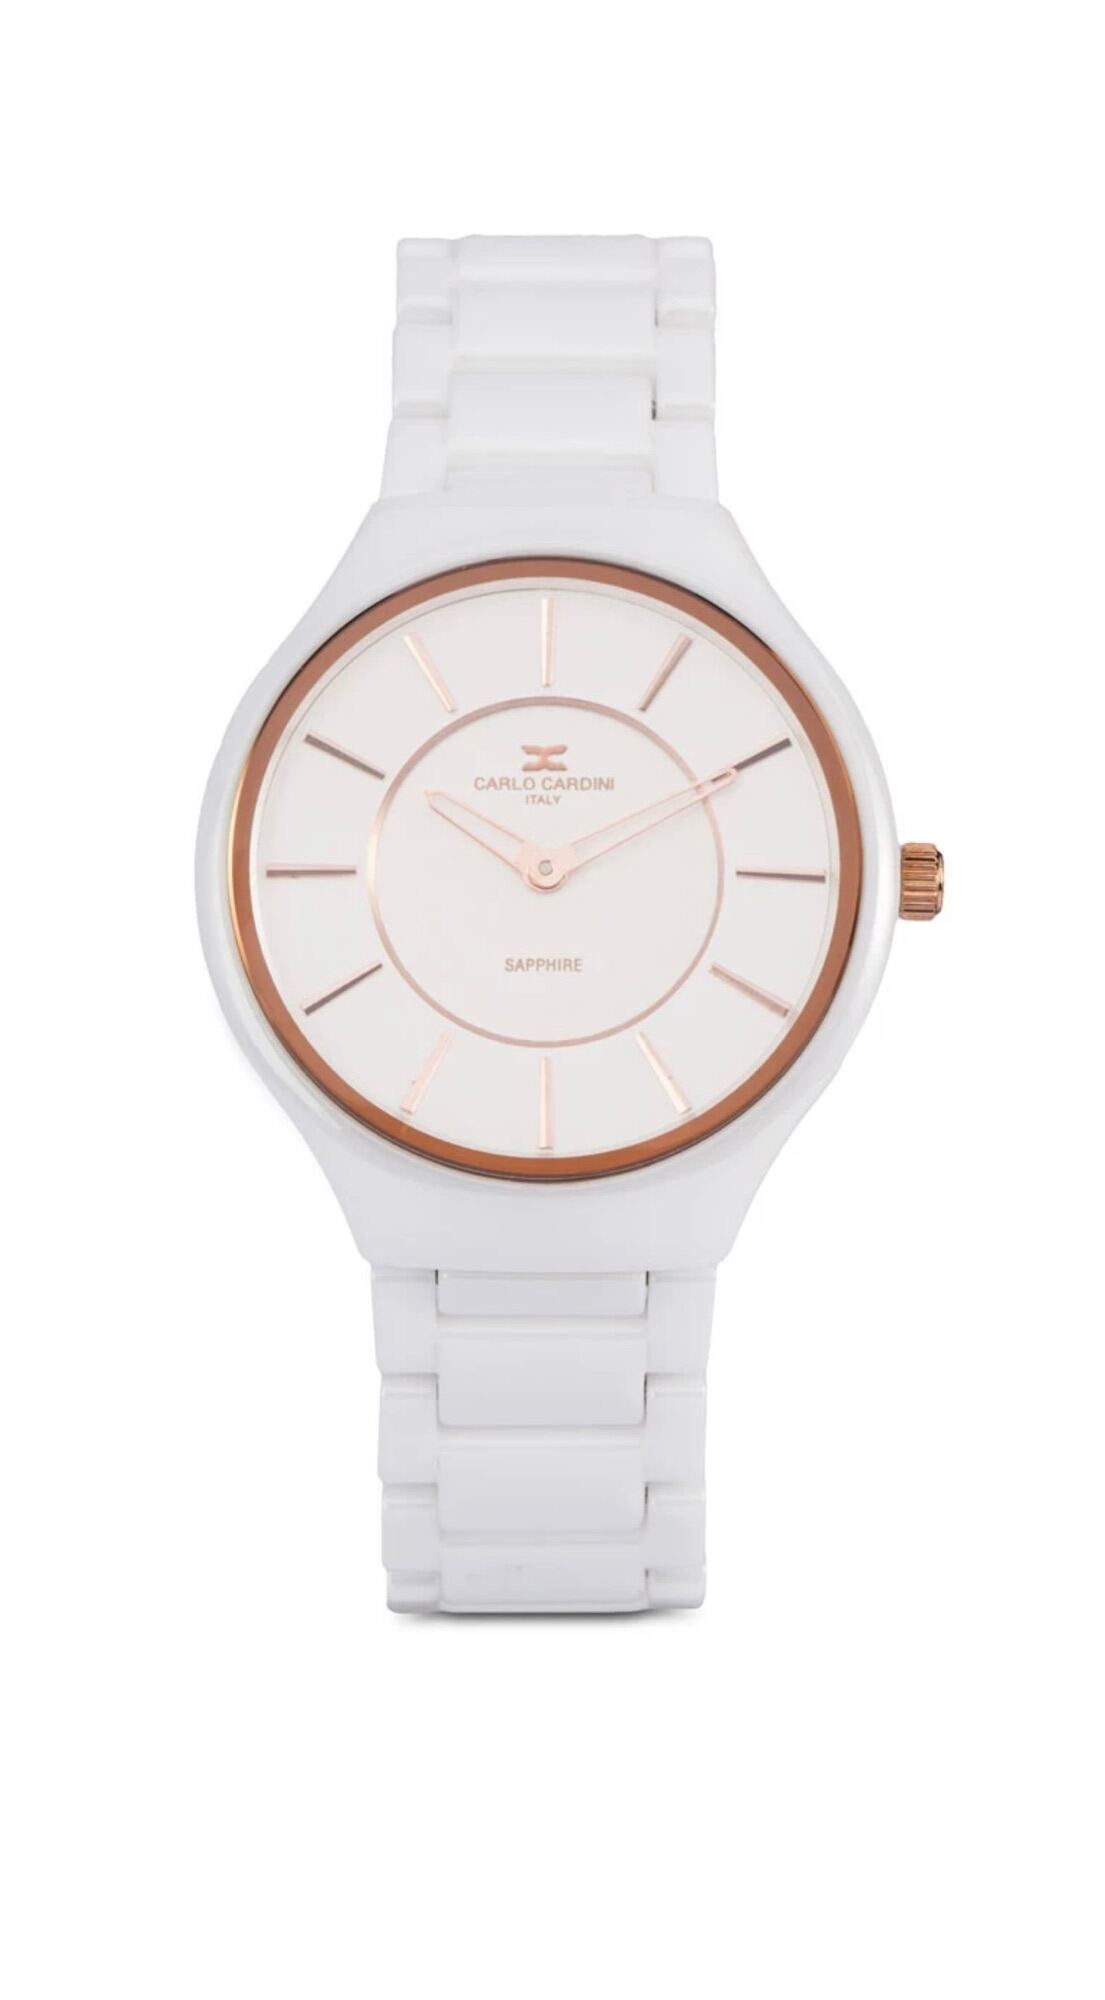 Cardini Wristwatches for sale | eBay